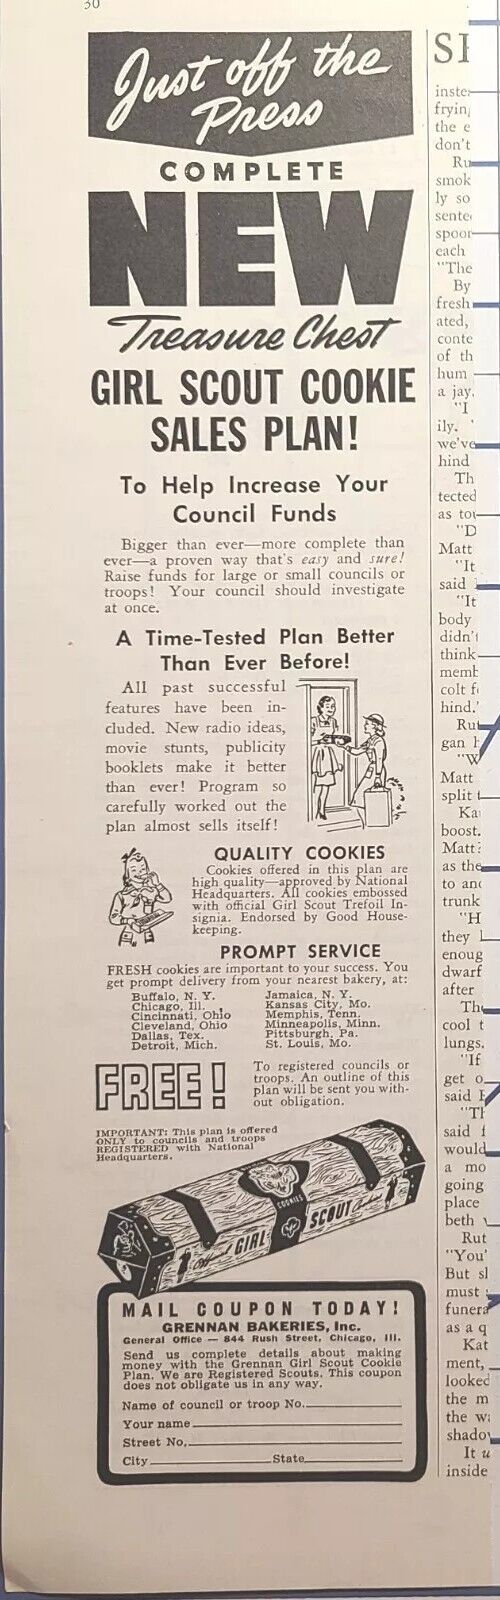 Grennan Bakeries Chicago Girl Scout Cookies Sales Plan Vintage Print Ad 1941